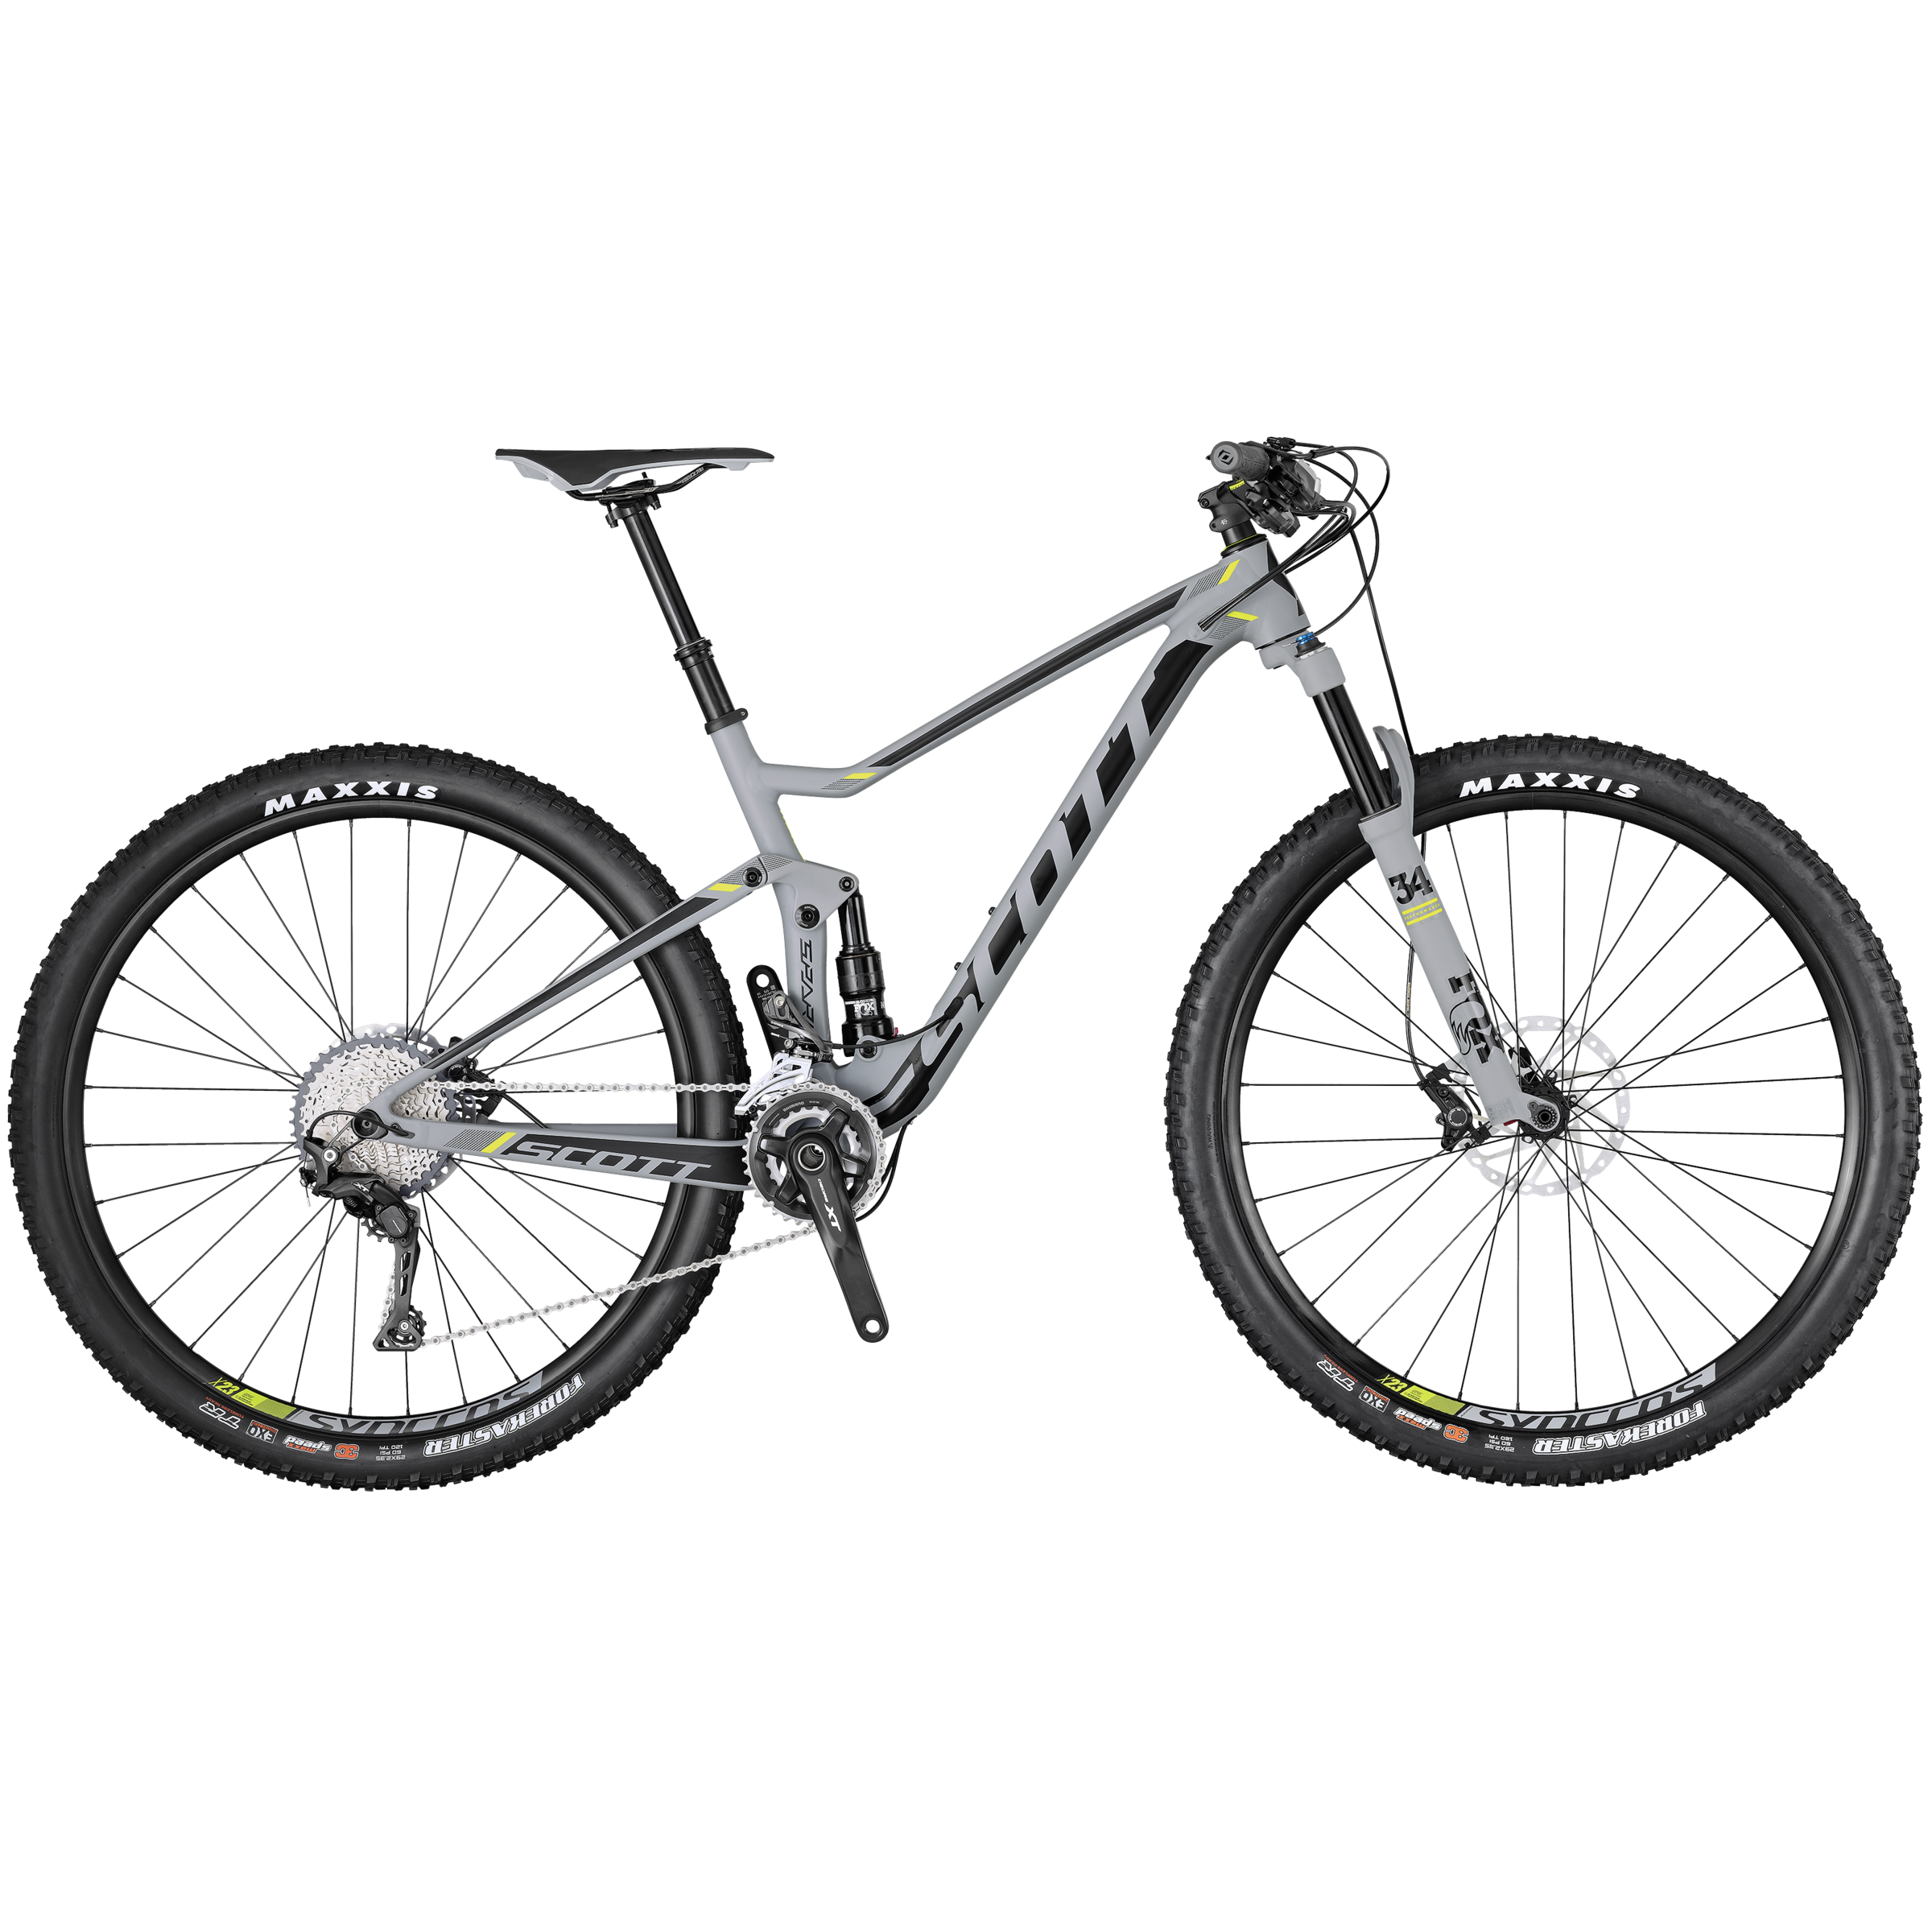 2017 Scott Spark 940 - Bicycle Details 